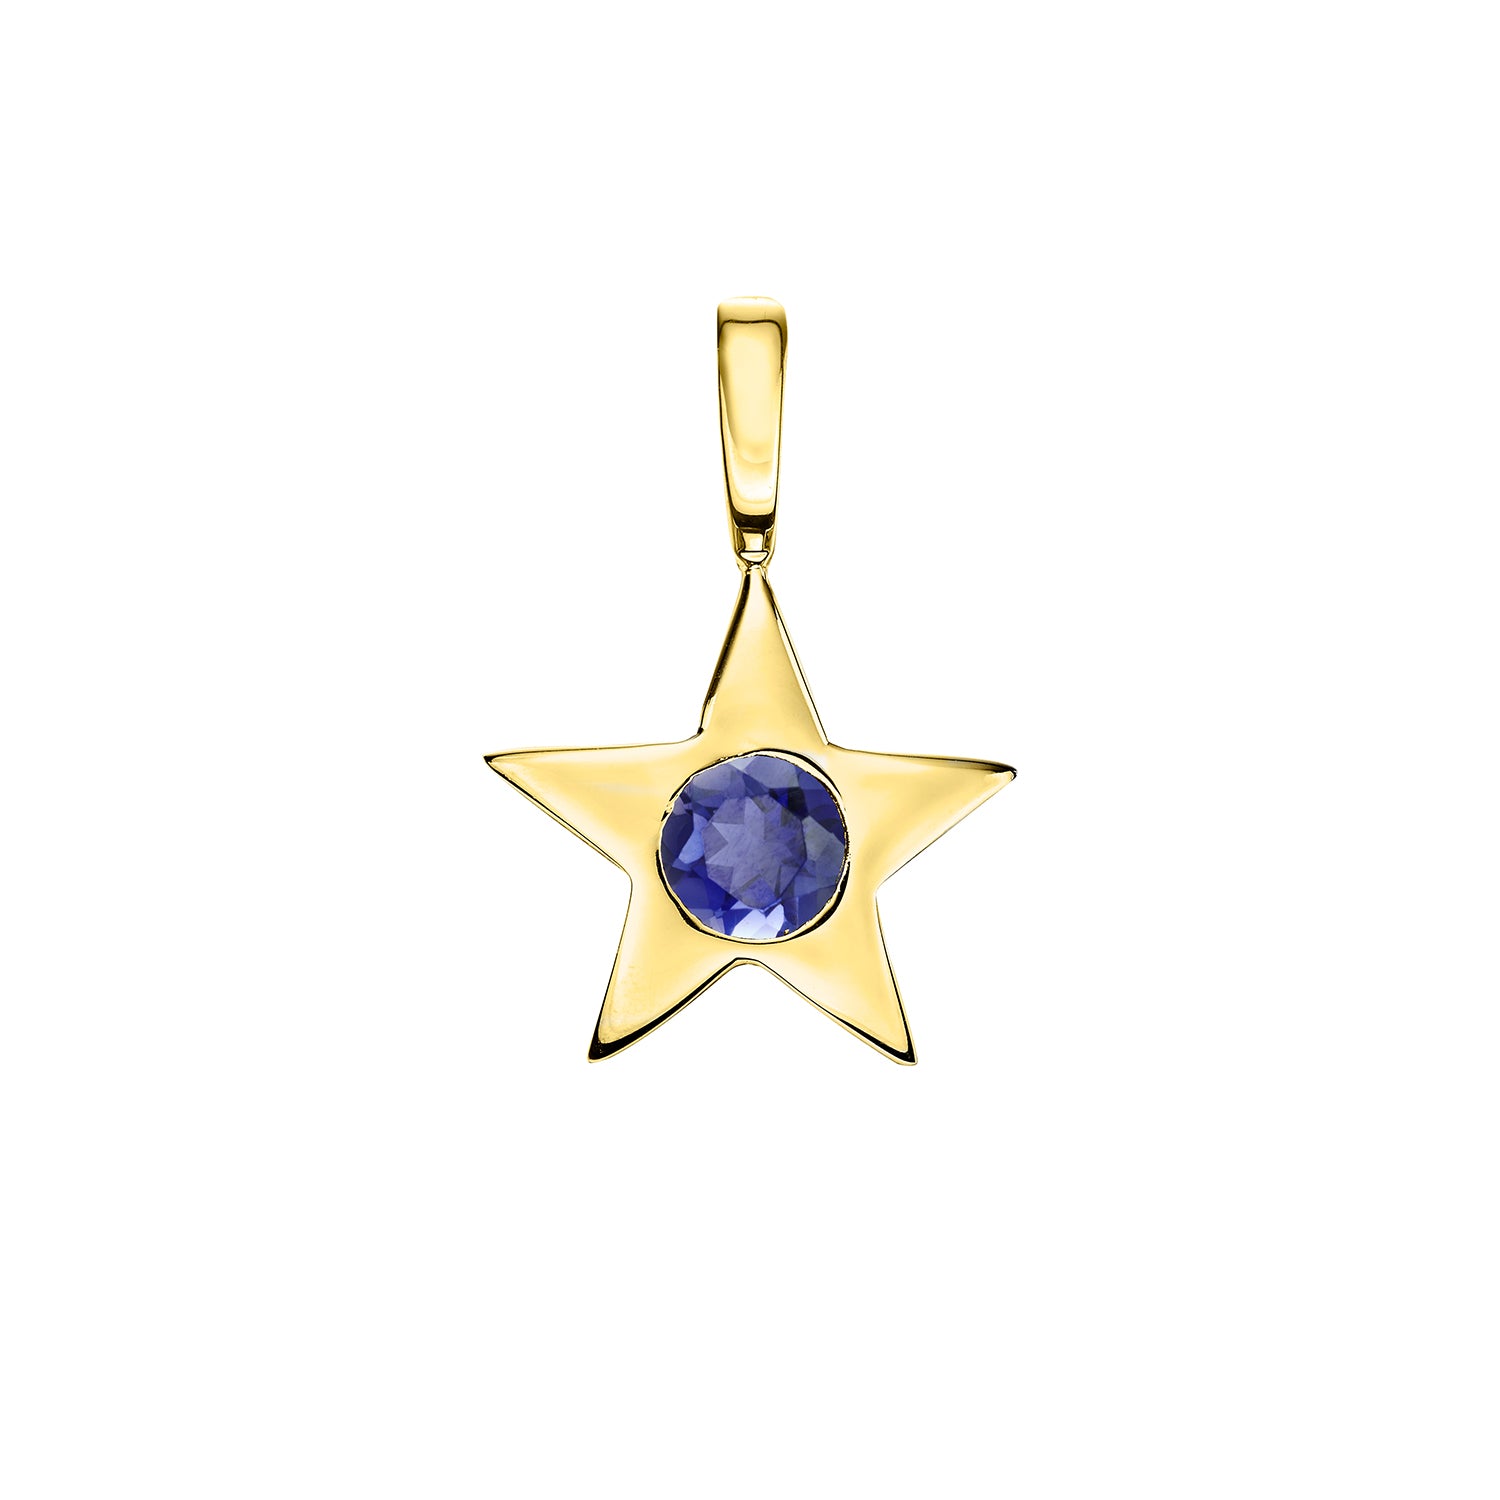 Polished Gold Vermeil Star Birthstone Charm - September / Iolite